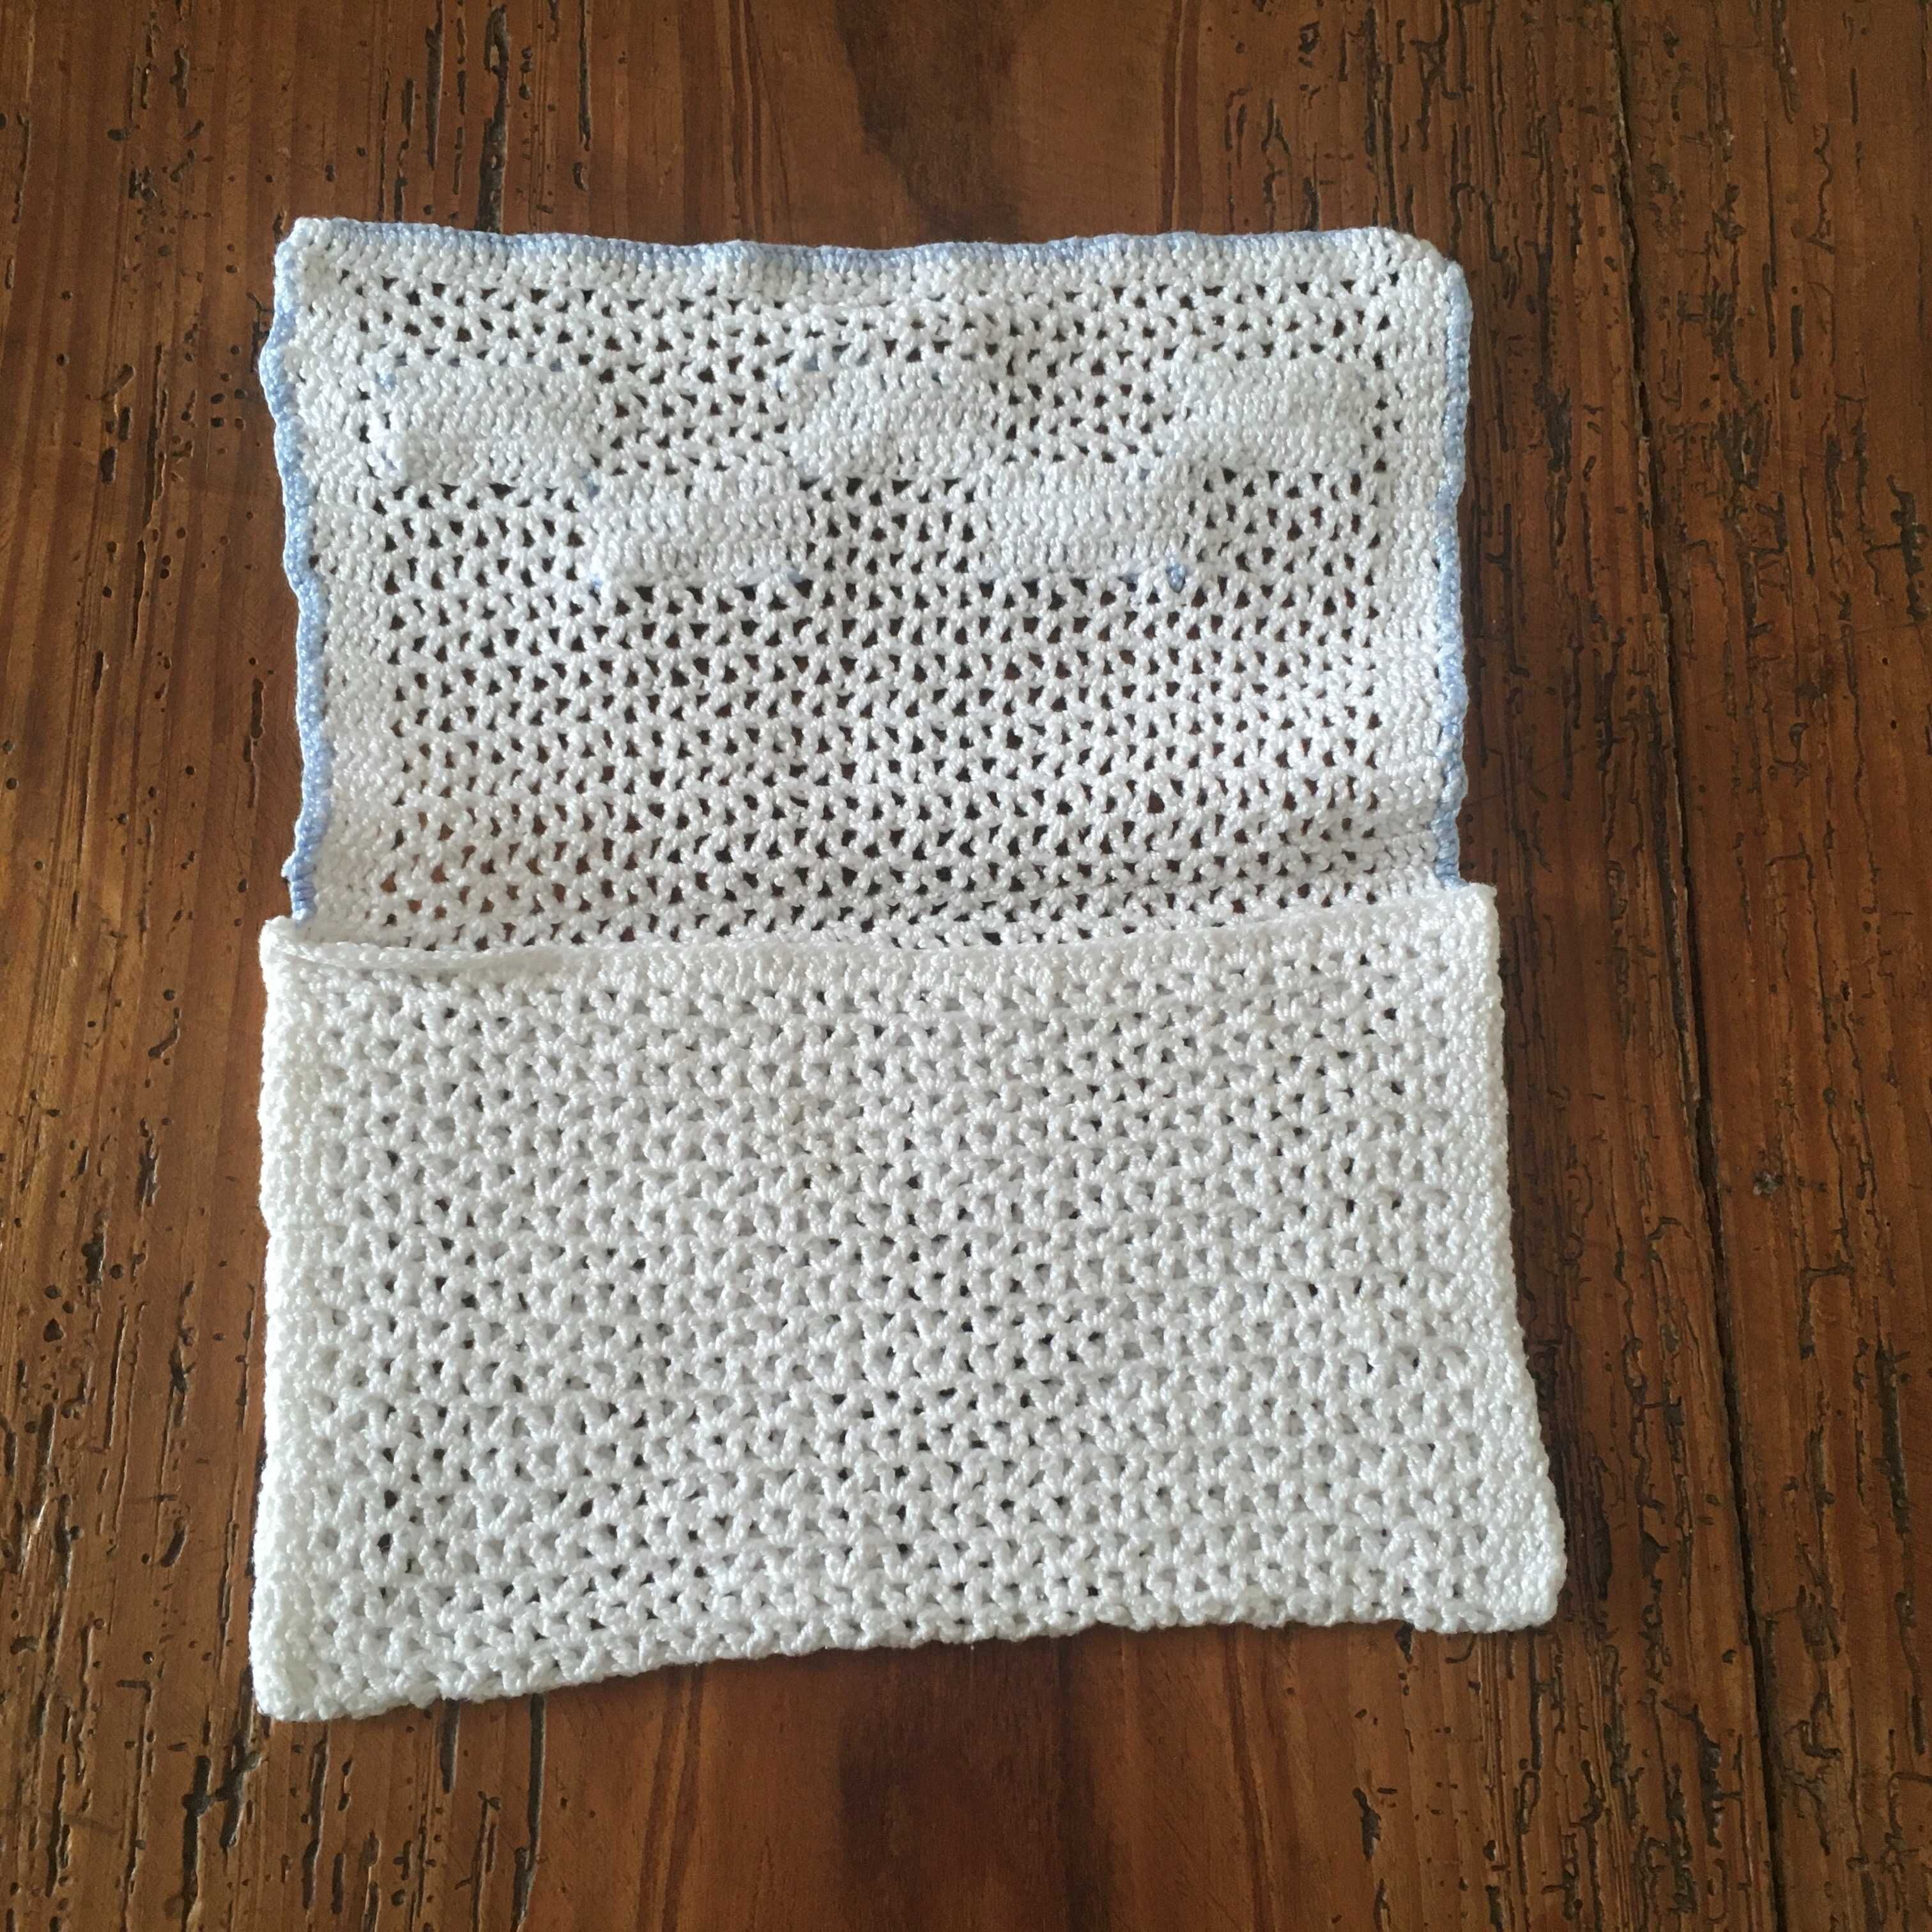 Bolsas guardanapo feita em crochet novas